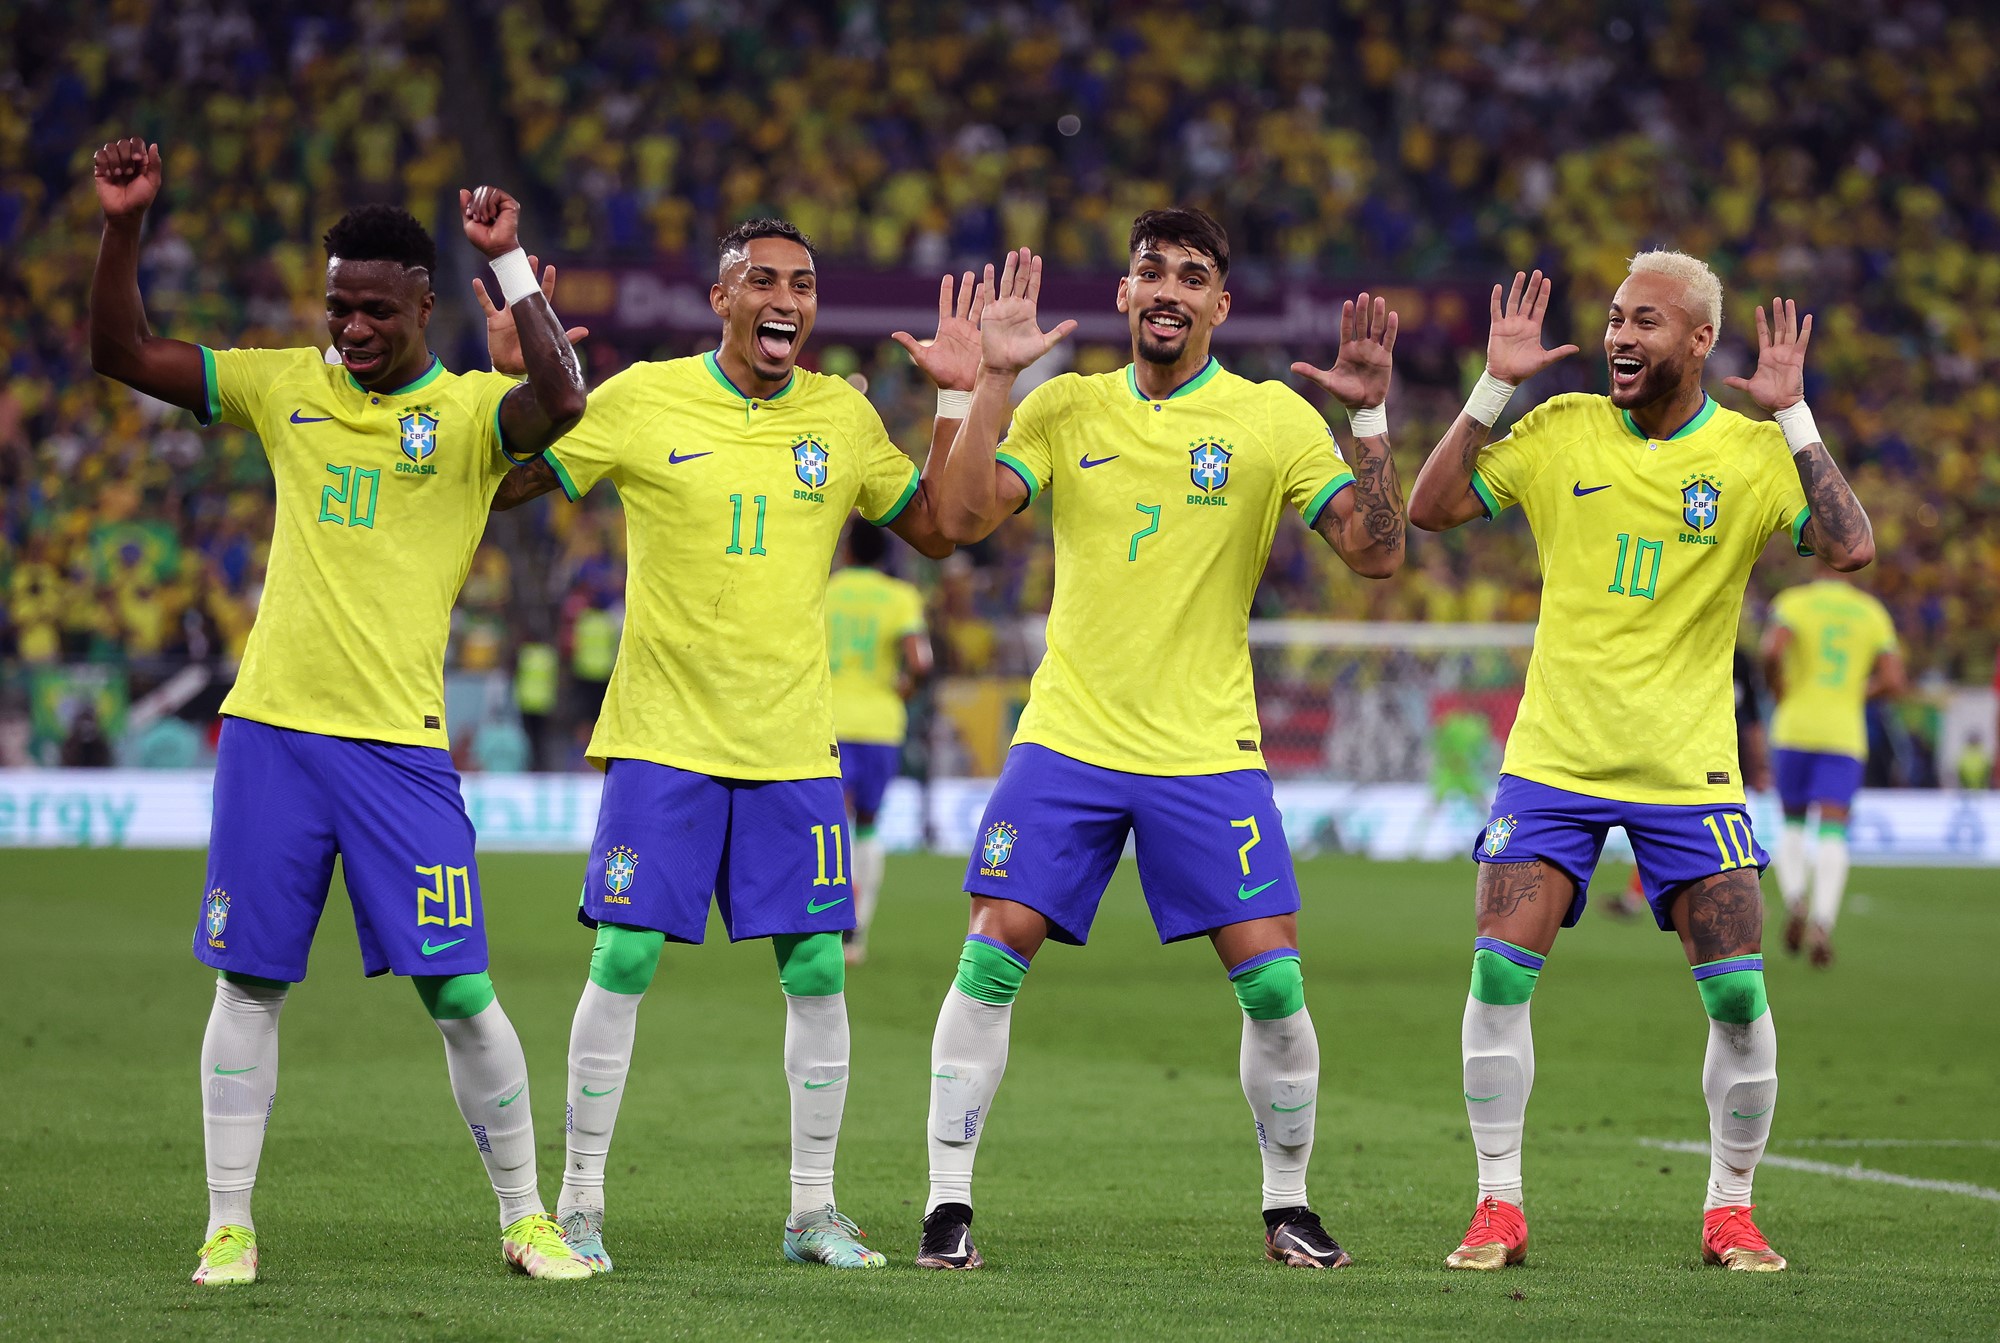 Vini Junior, Raphinha, Lucas Paqueta and Neymar dance to celebrate a goal against South Korea at the FIFA World Cup in Qatar.